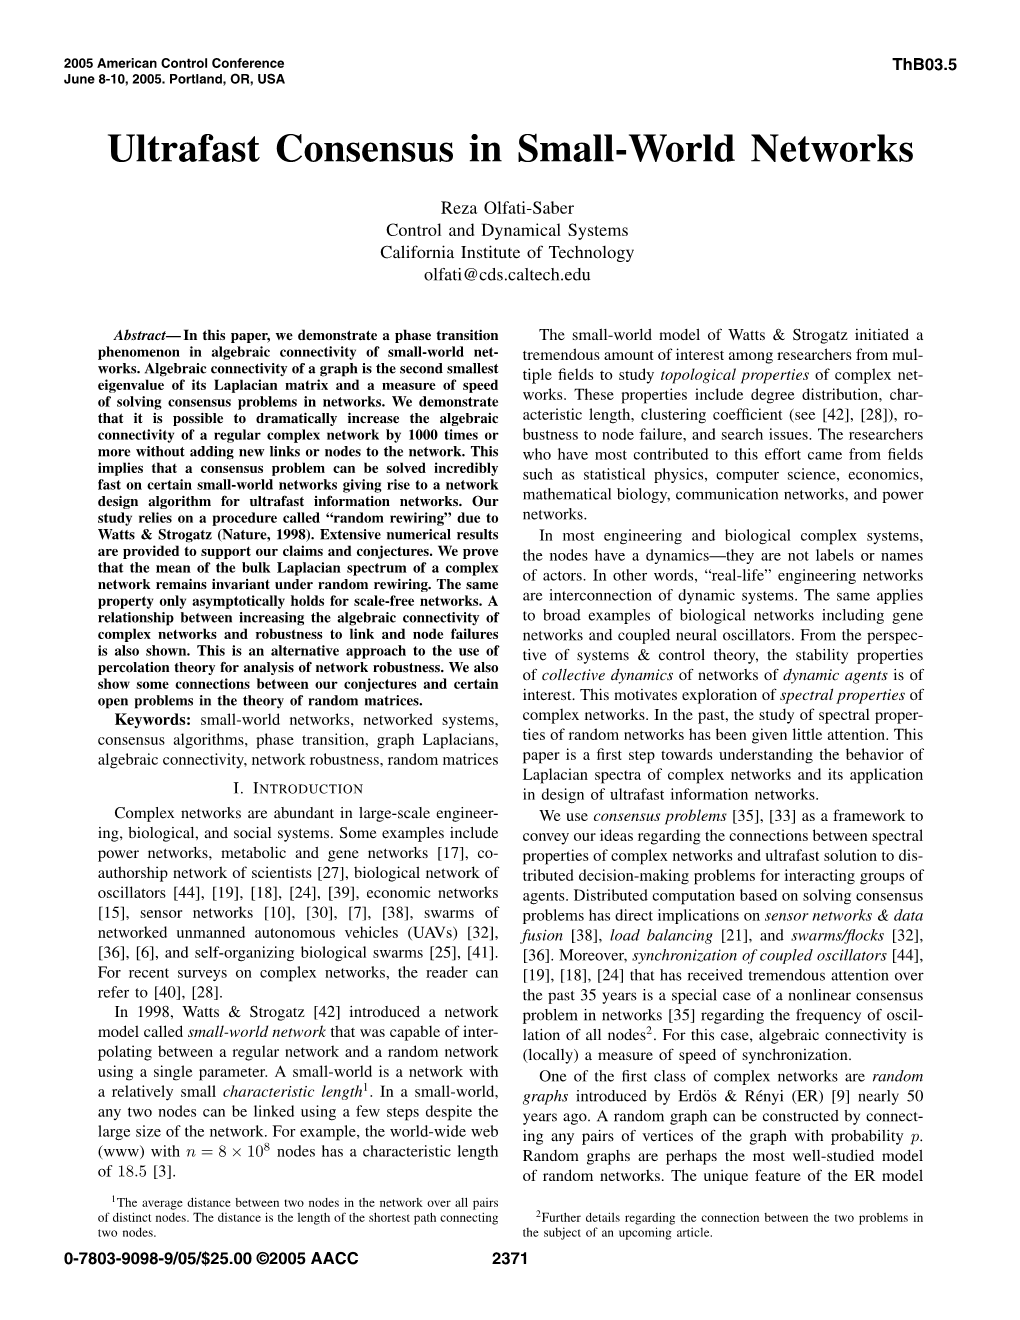 Ultrafast Consensus in Small-World Networks